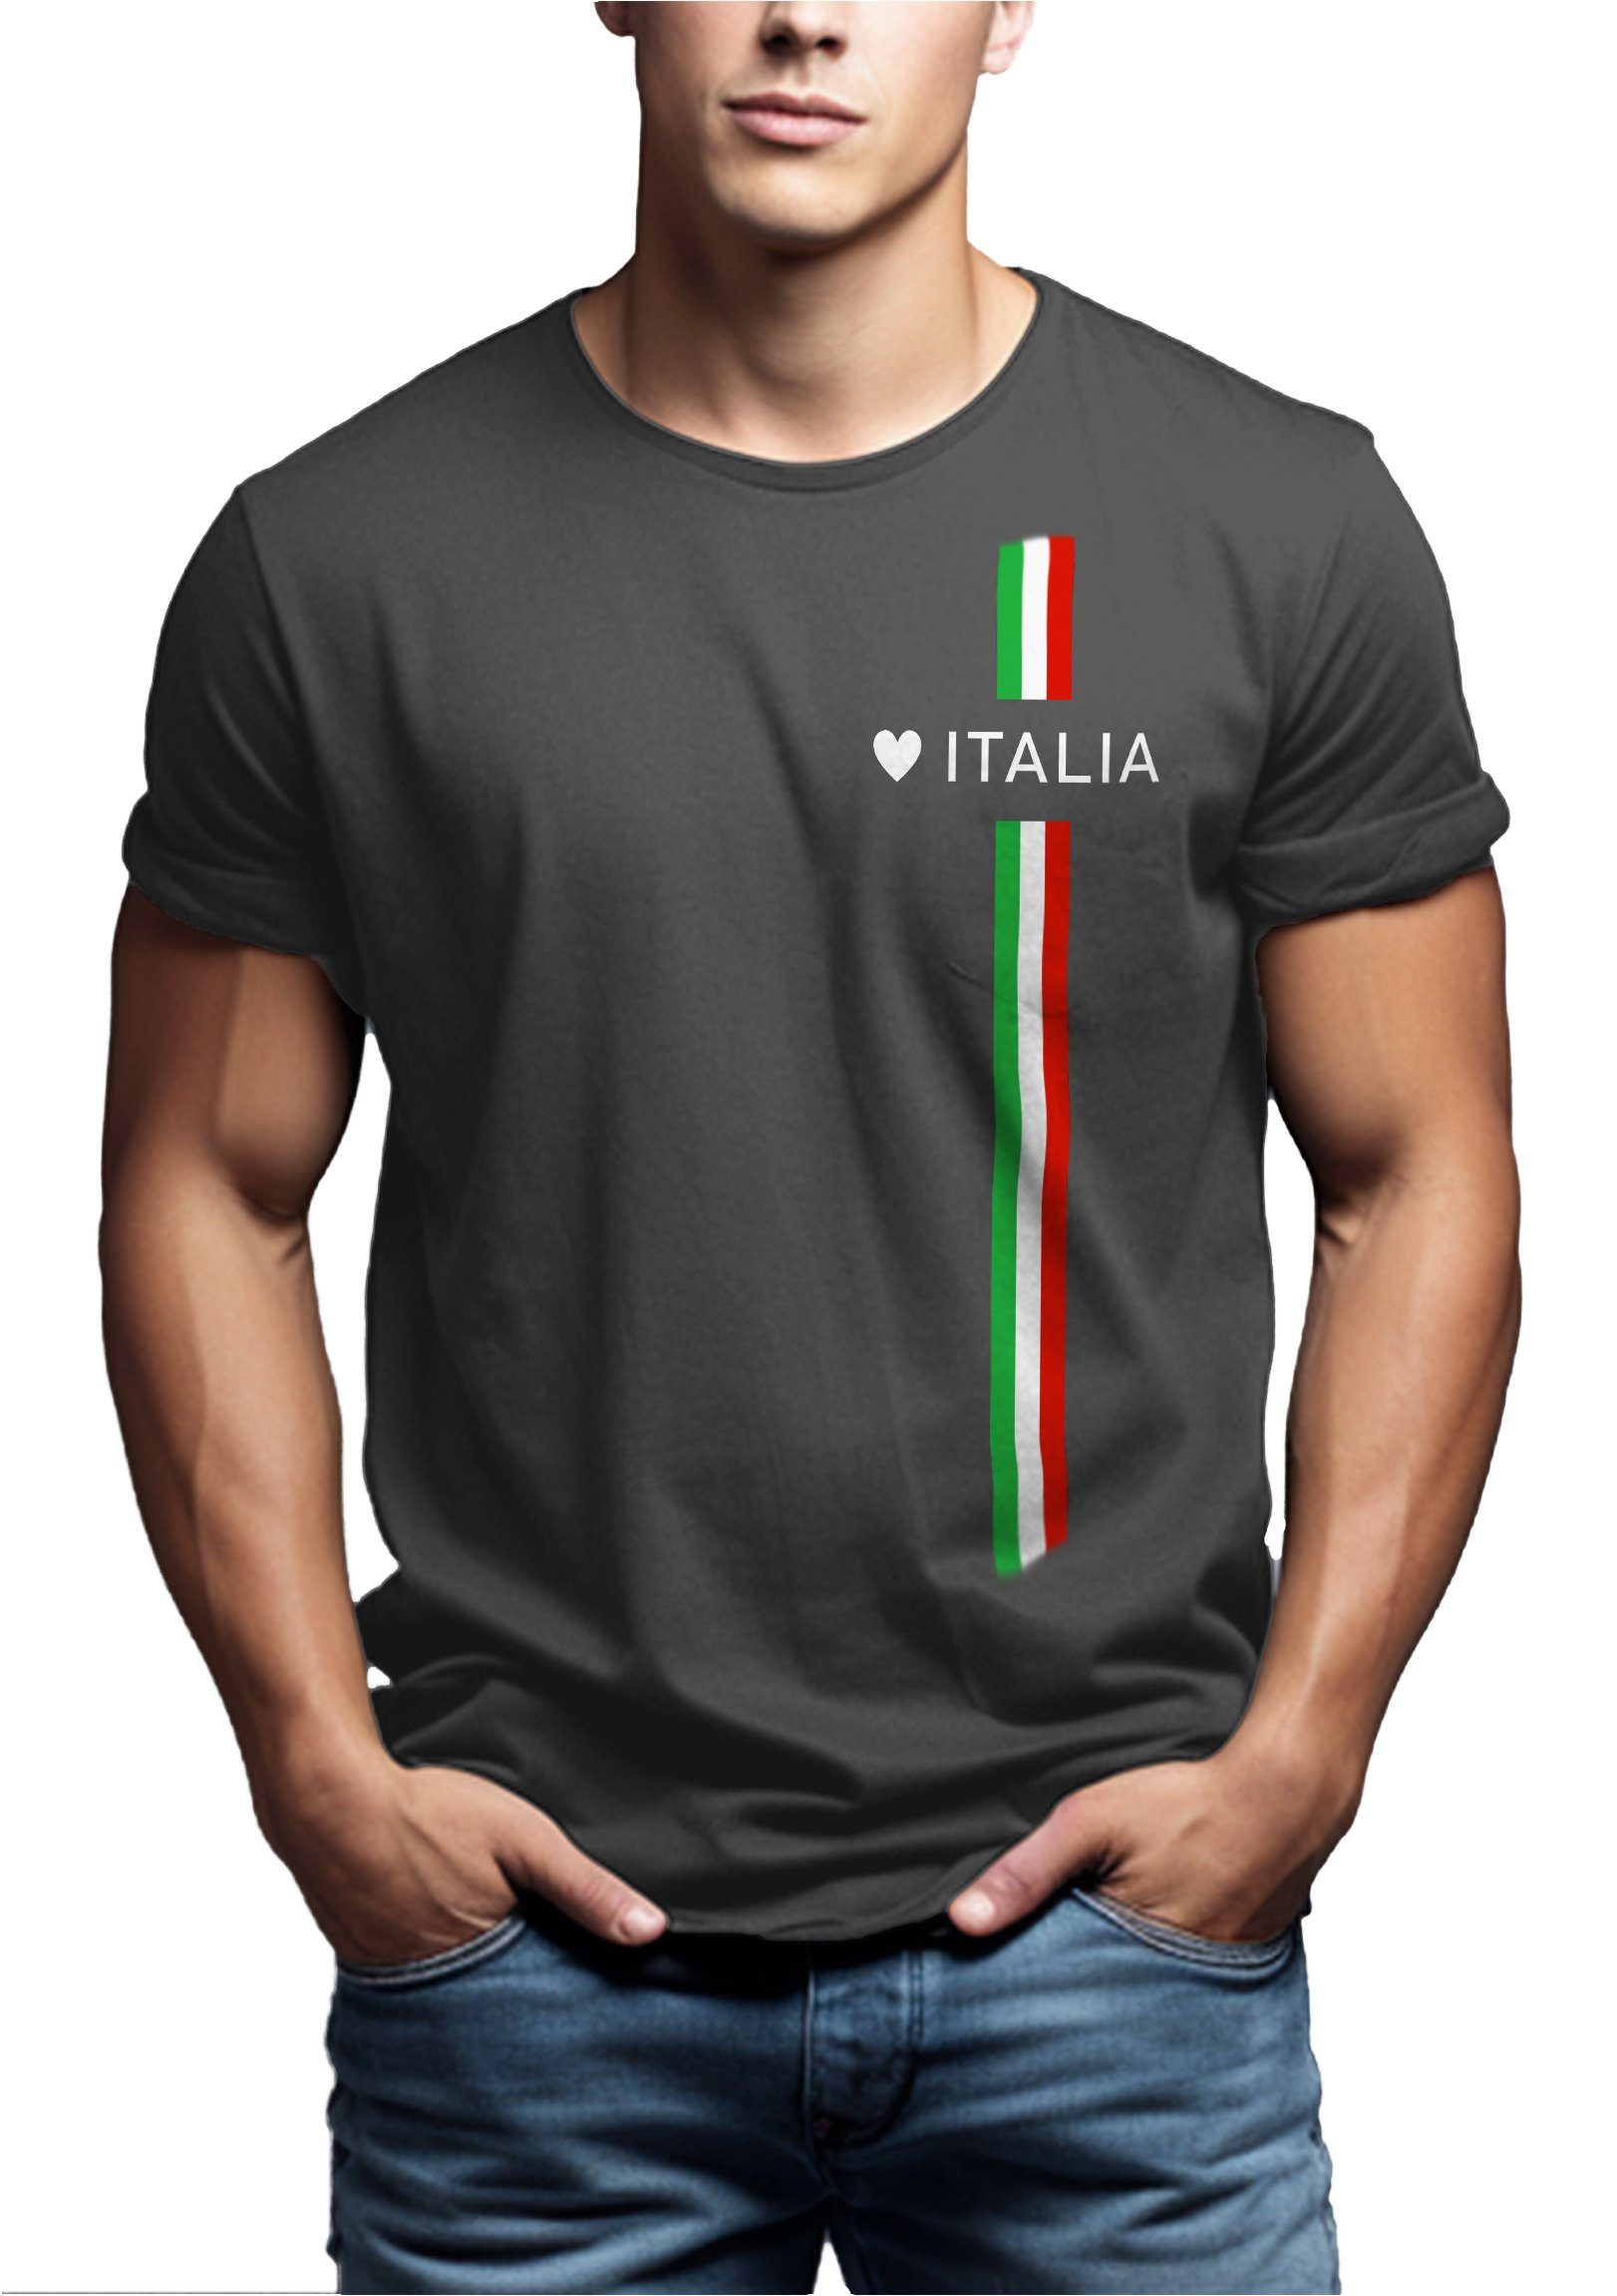 Grau MAKAYA Italien T-Shirt Italia Italienische Fahne Flagge Männer Trikot Fußball Jungs, Herz Herren